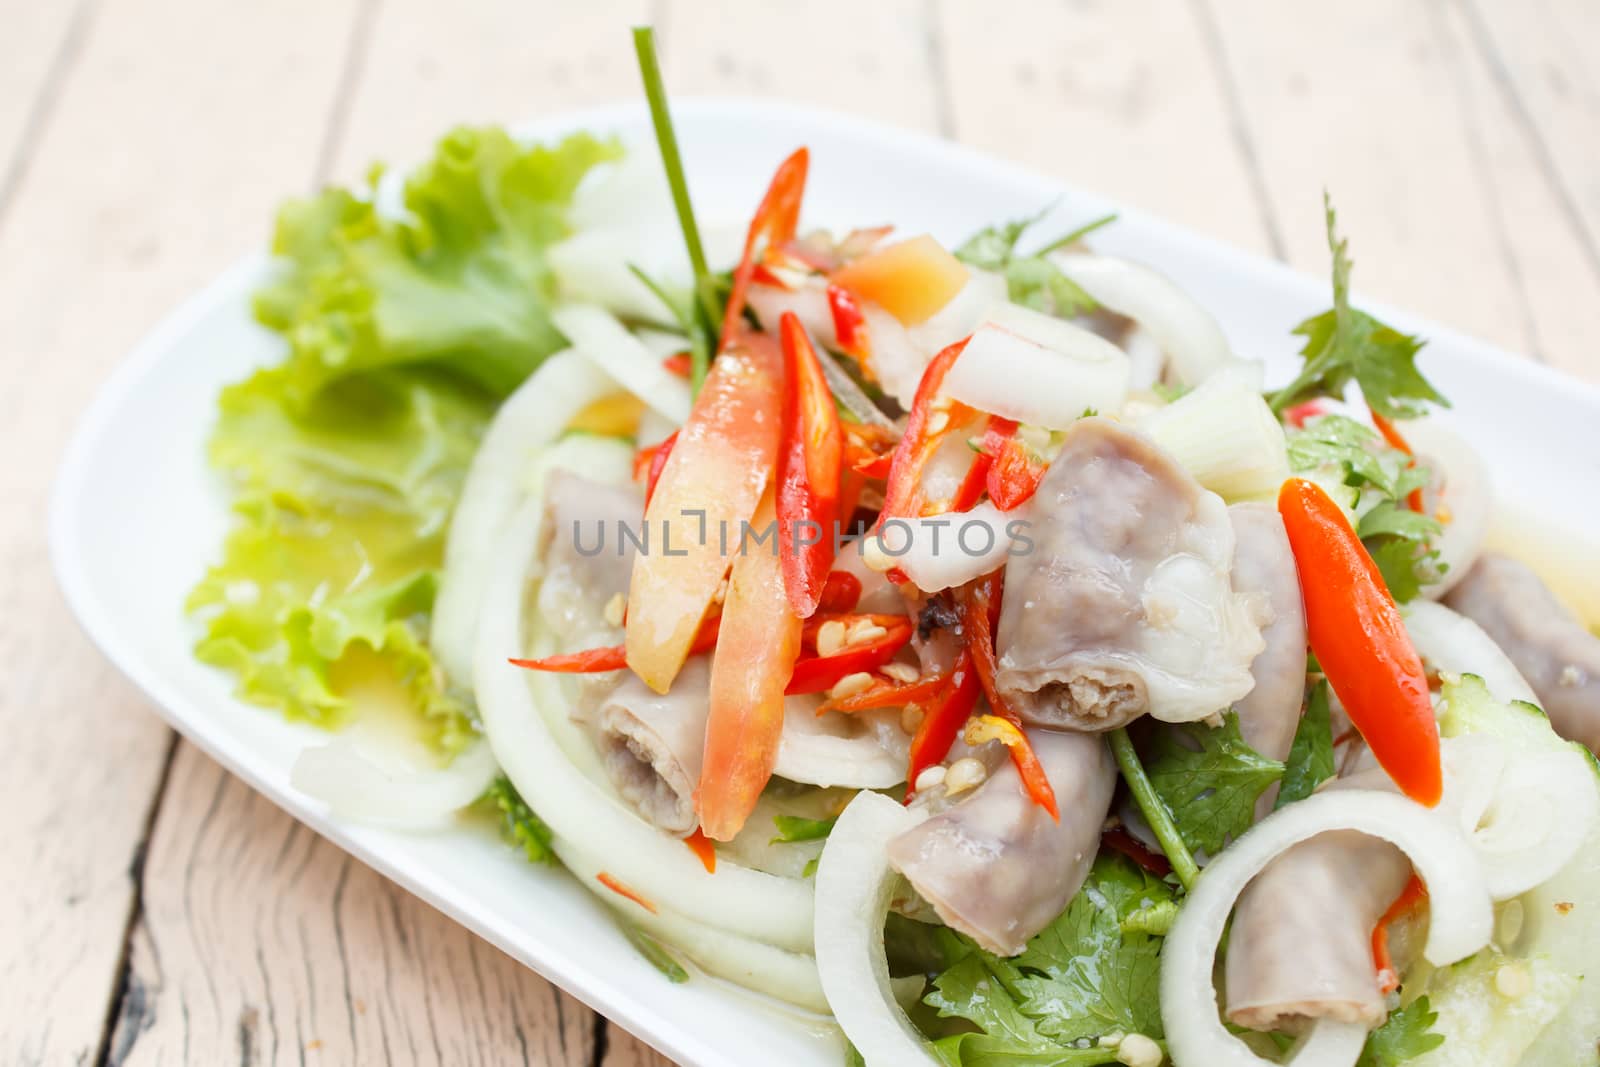 spicy intestines pork salad with vegetable - Thai food